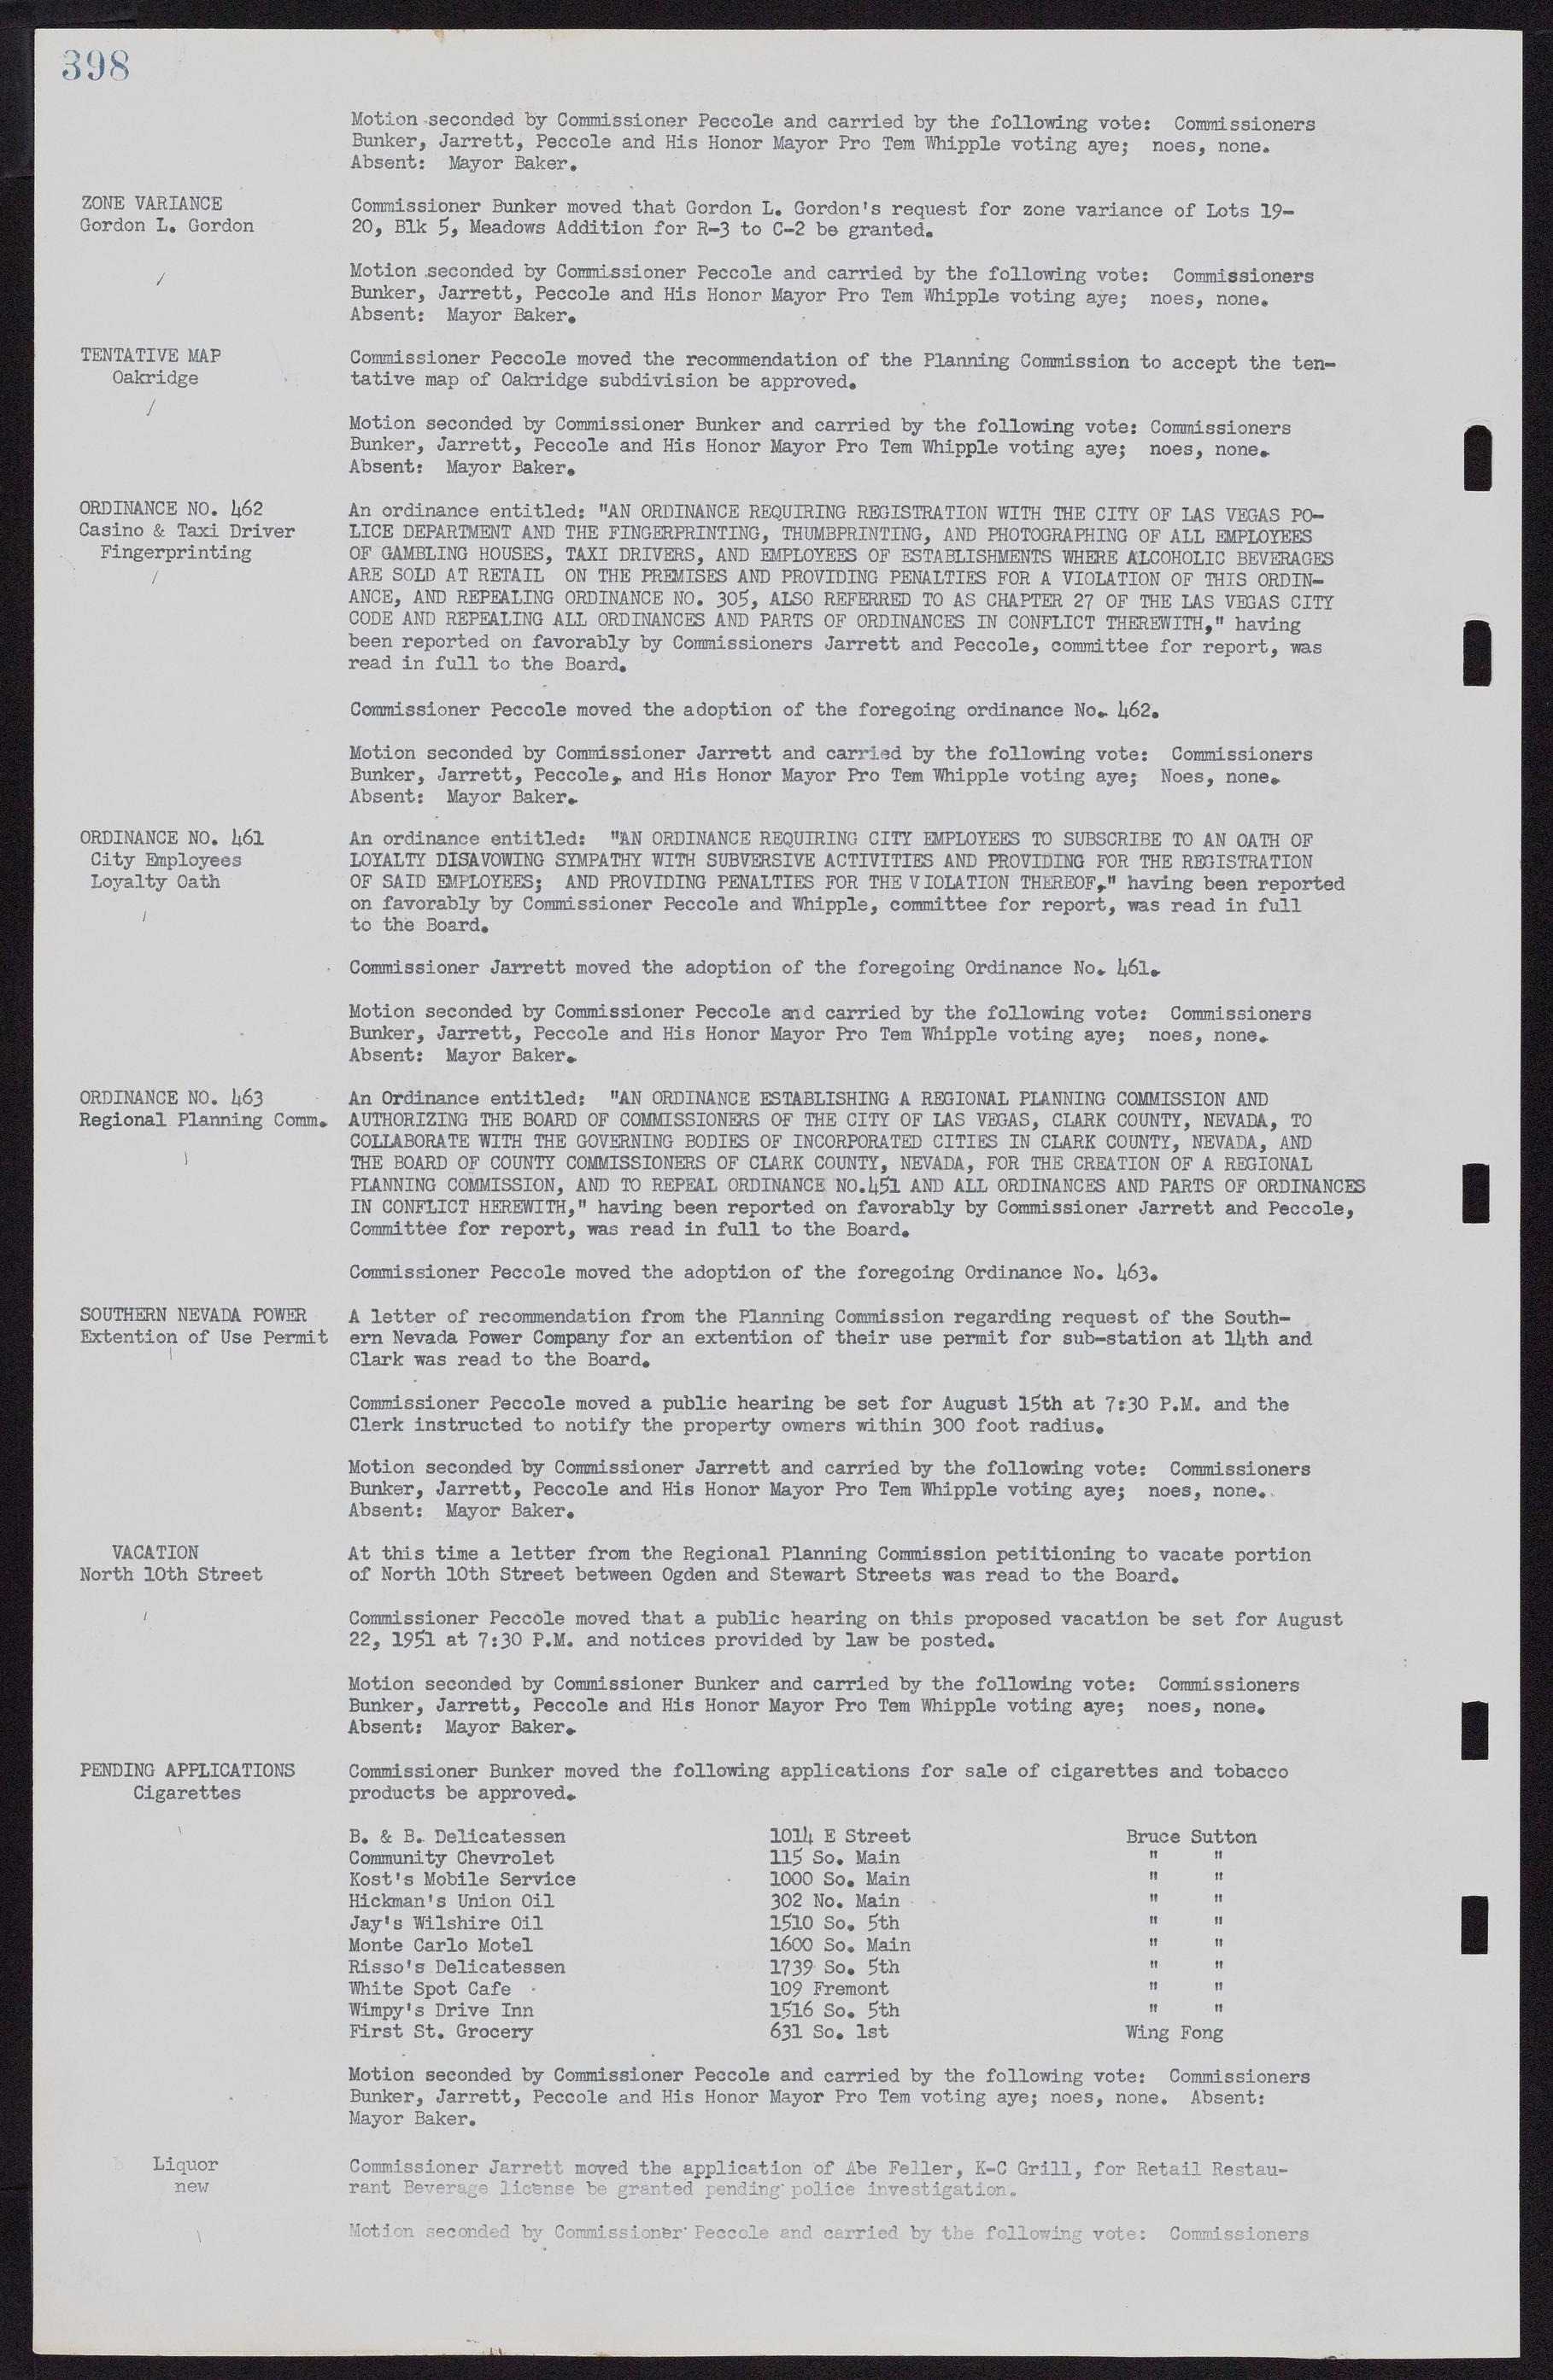 Las Vegas City Commission Minutes, November 7, 1949 to May 21, 1952, lvc000007-414